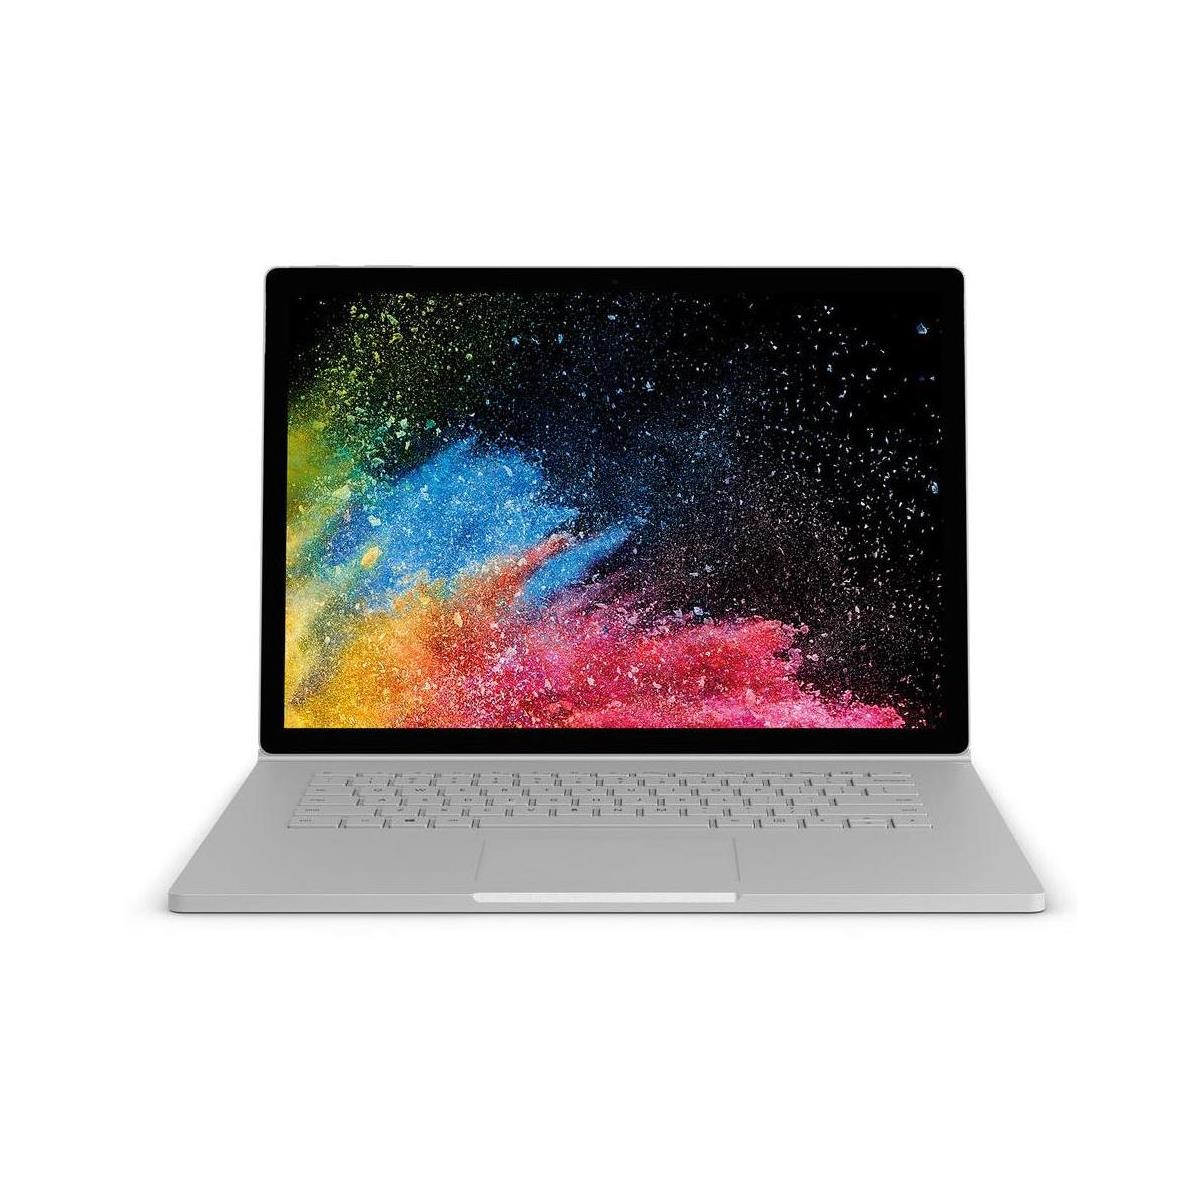 Microsoft Surface Book 2 (Intel i5, 8GB RAM, 256GB SSD) 笔记本电脑